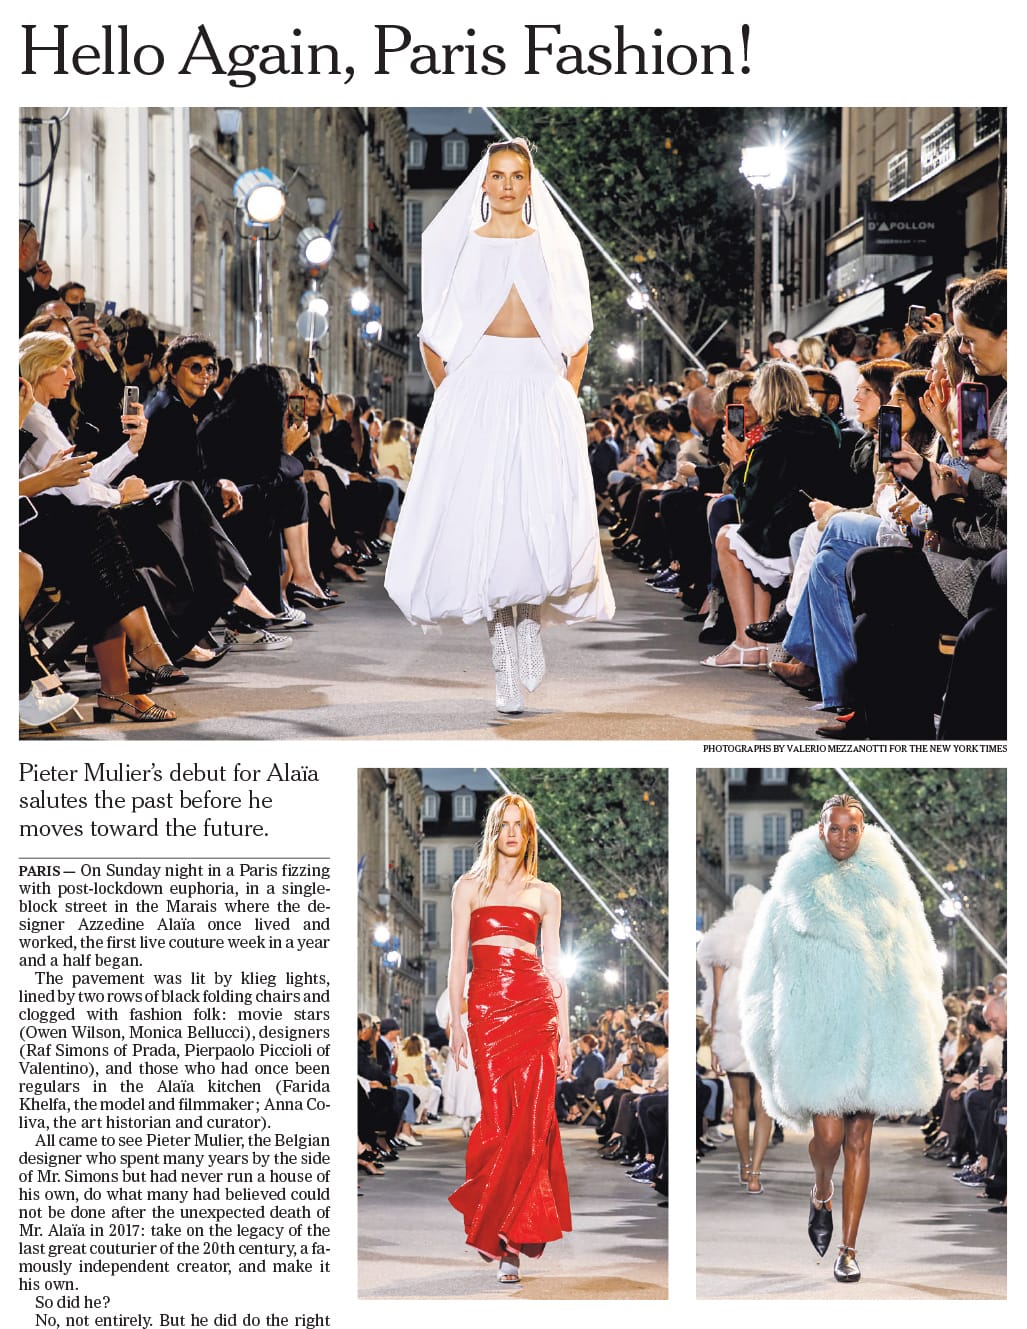 Alaia Fashion Show, Photo By Valerio Mezzanotti For The New York Times